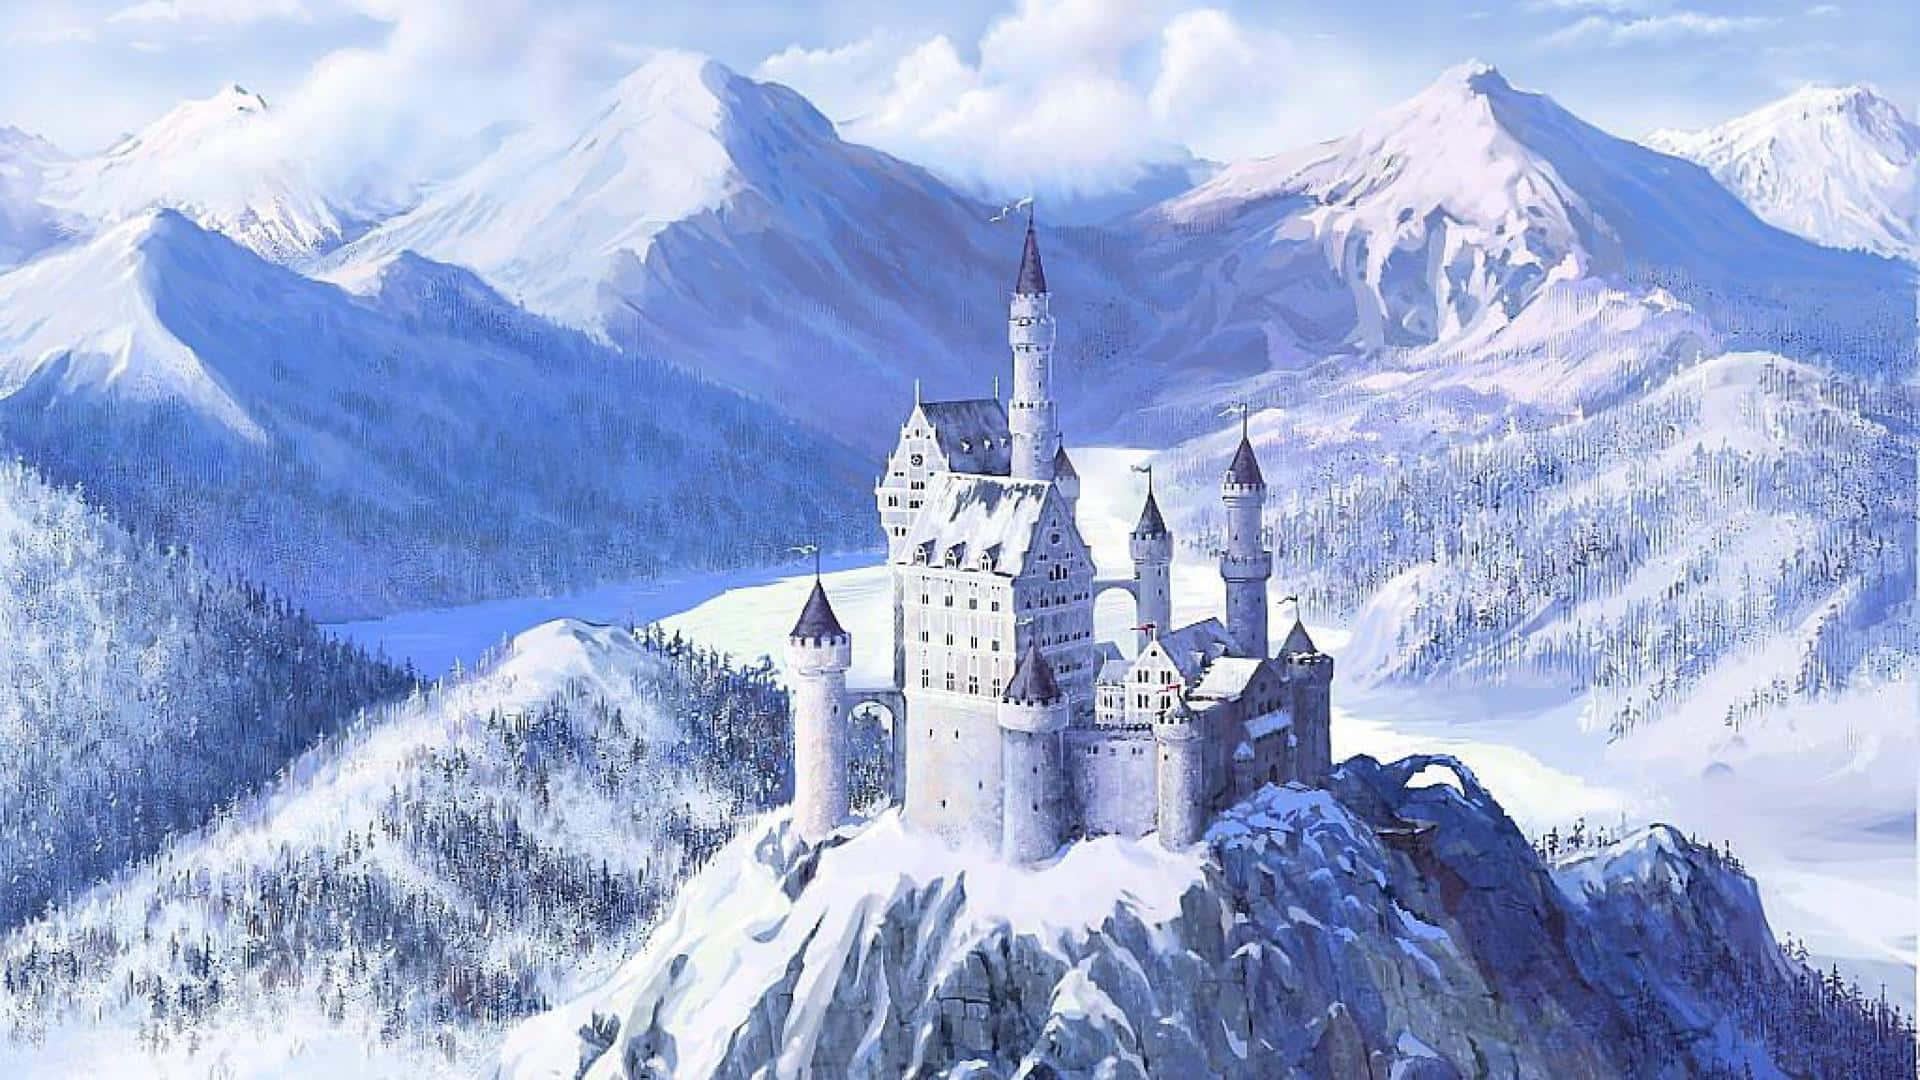 Take a Virtual Tour of This Beautiful Castle